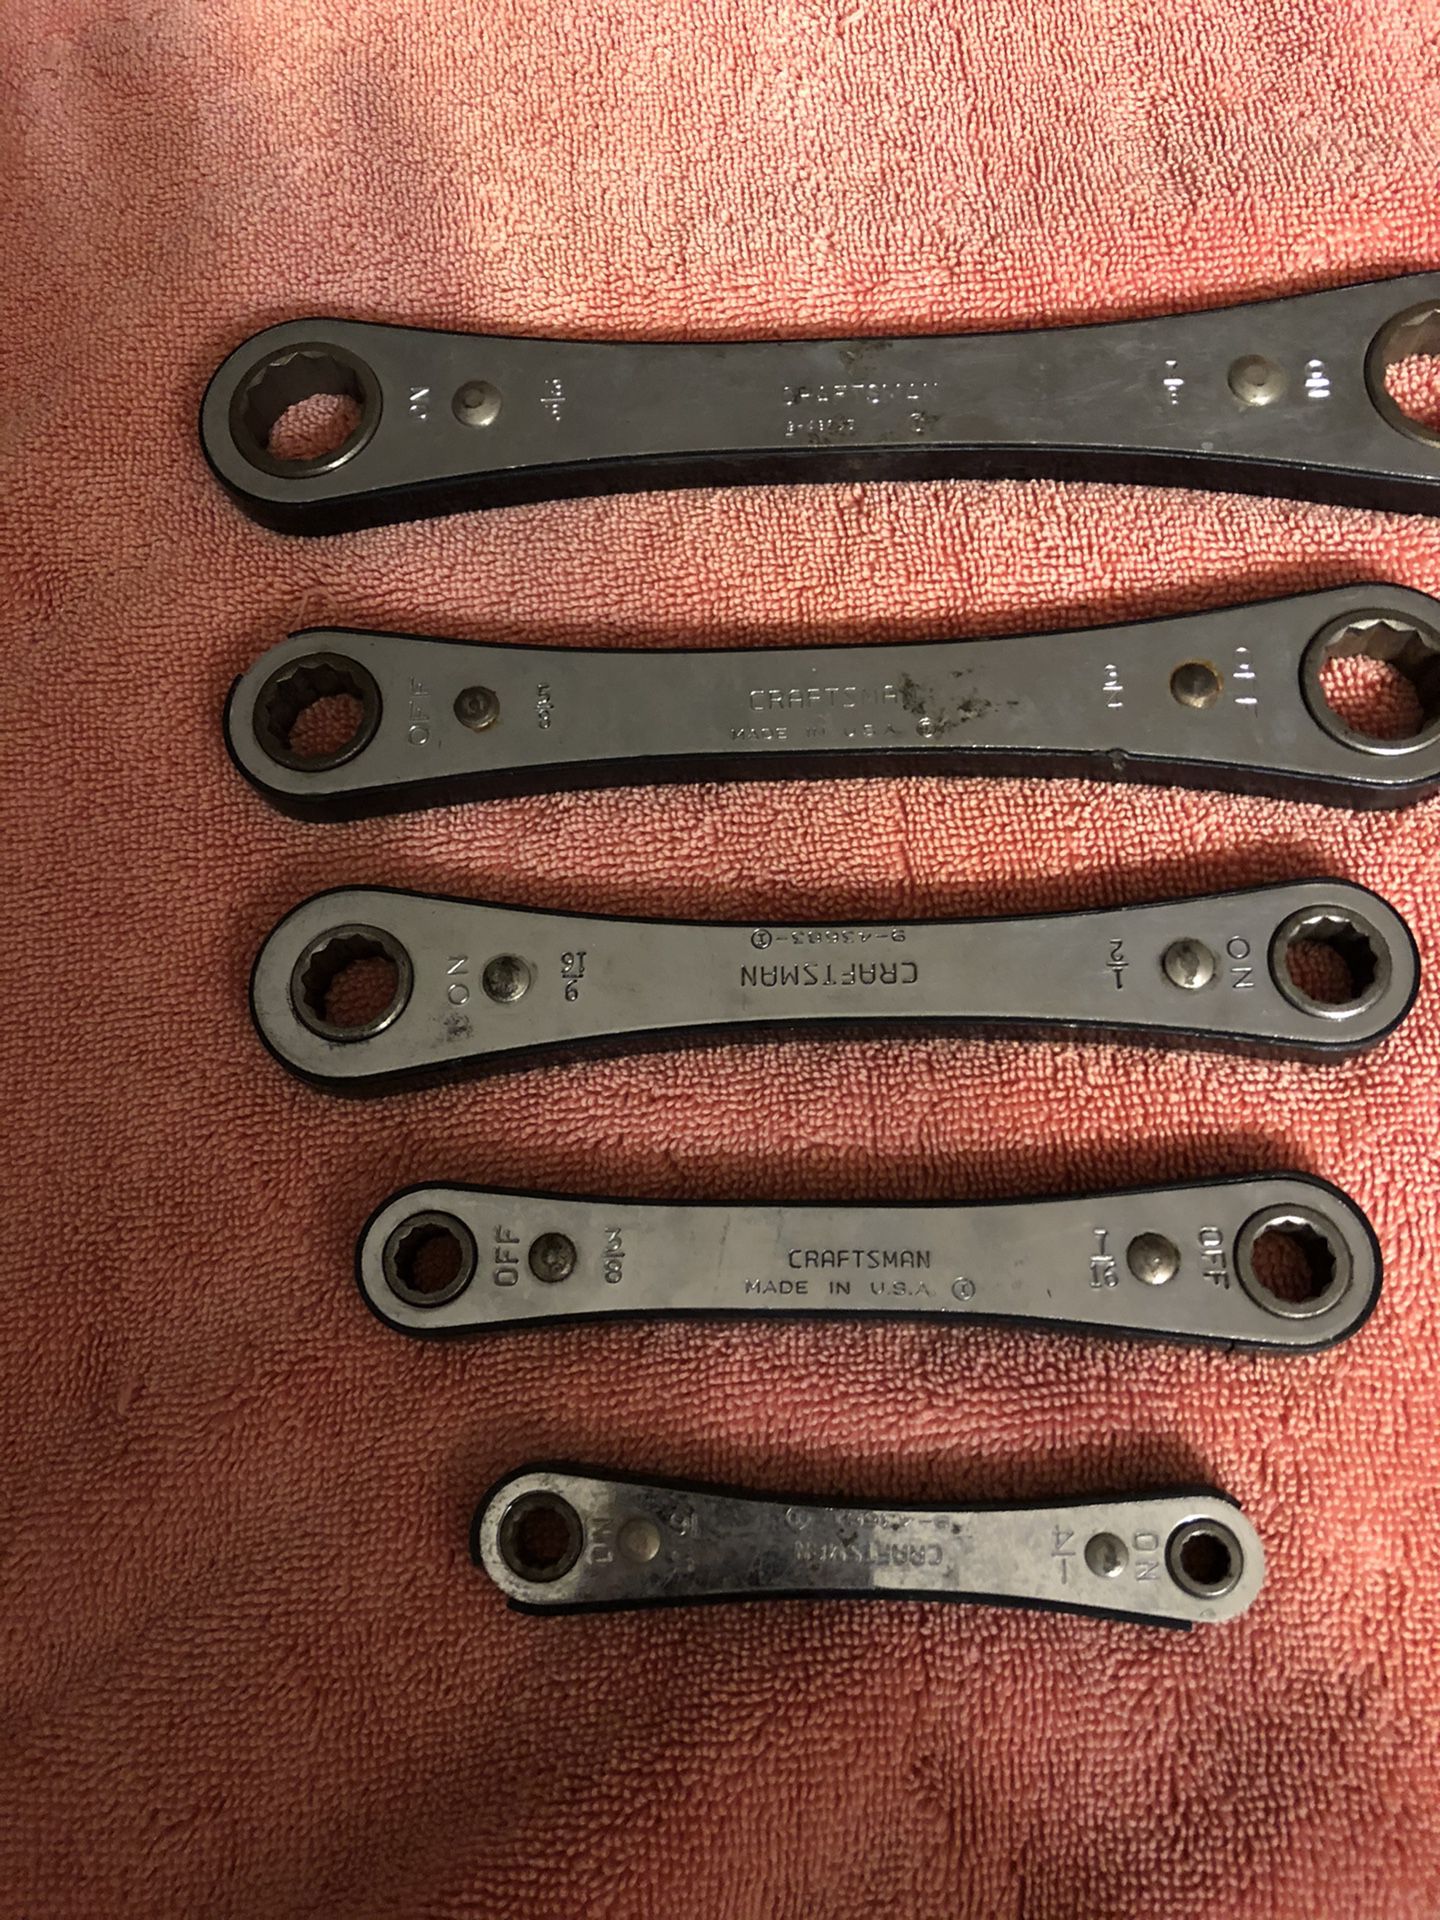 Craftsman Set 5 Box wrench Made USA.